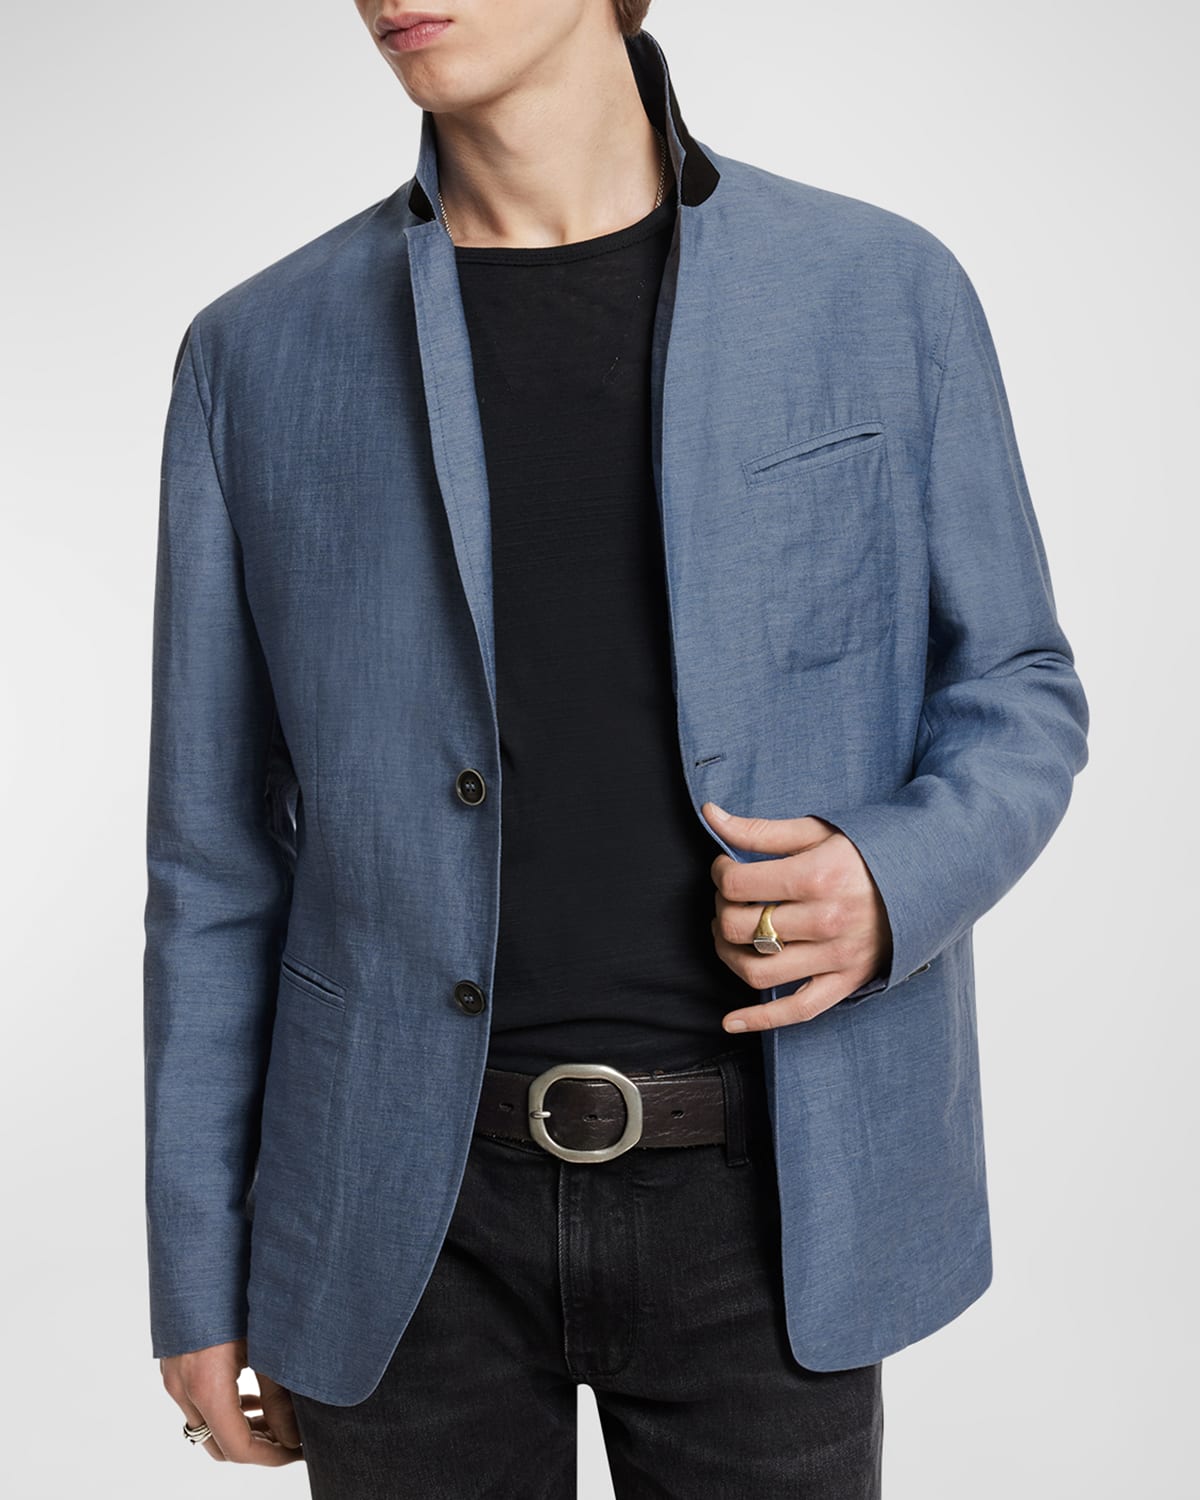 John Varvatos Men's Slim-Fit Notch Lapel Jacket